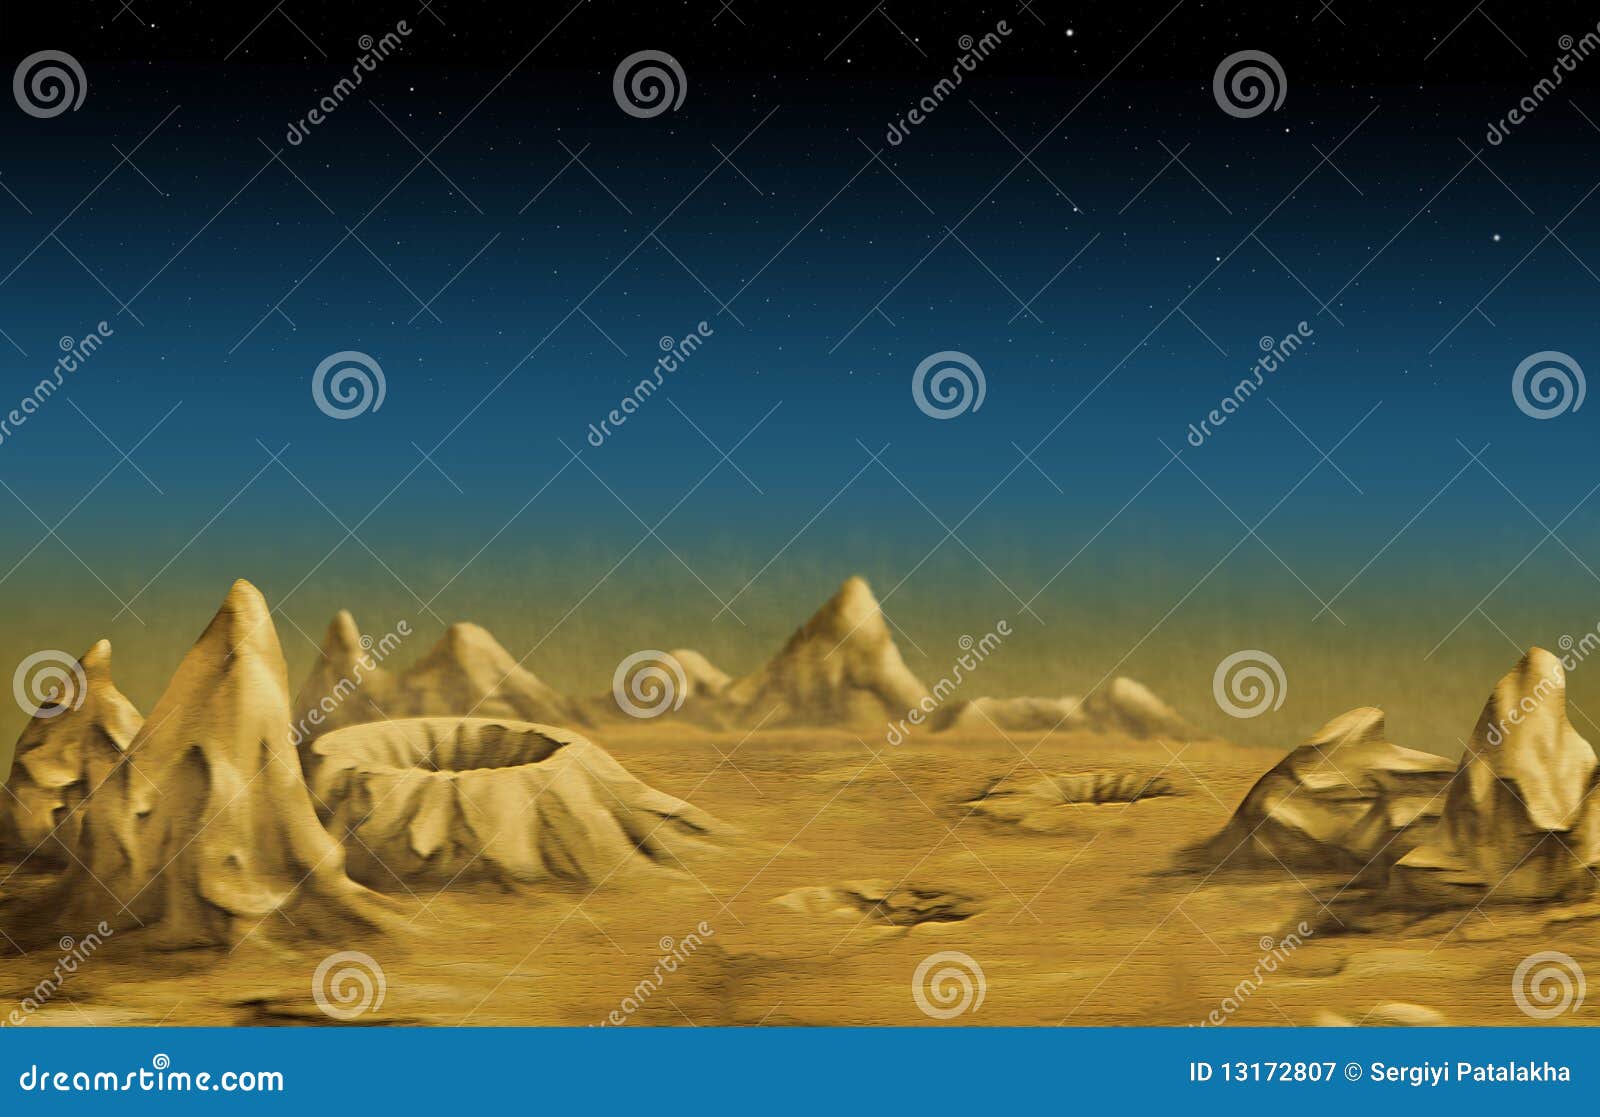 Lunar Landscape Royalty Free Stock Photography - Image: 13172807